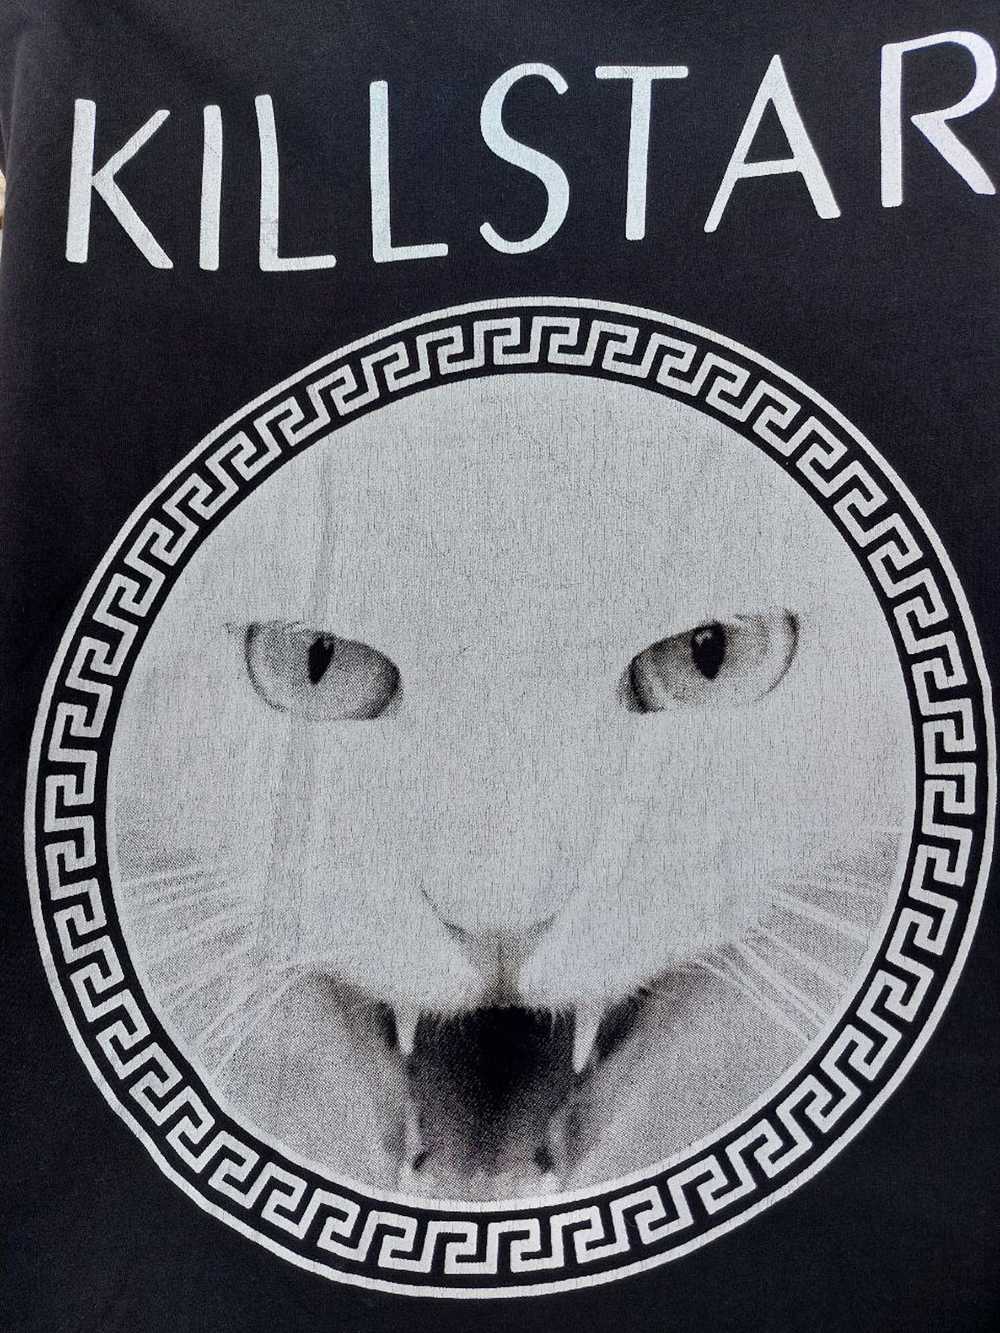 Killstar VERSACRIFICE No. 666 T-shirt - image 2